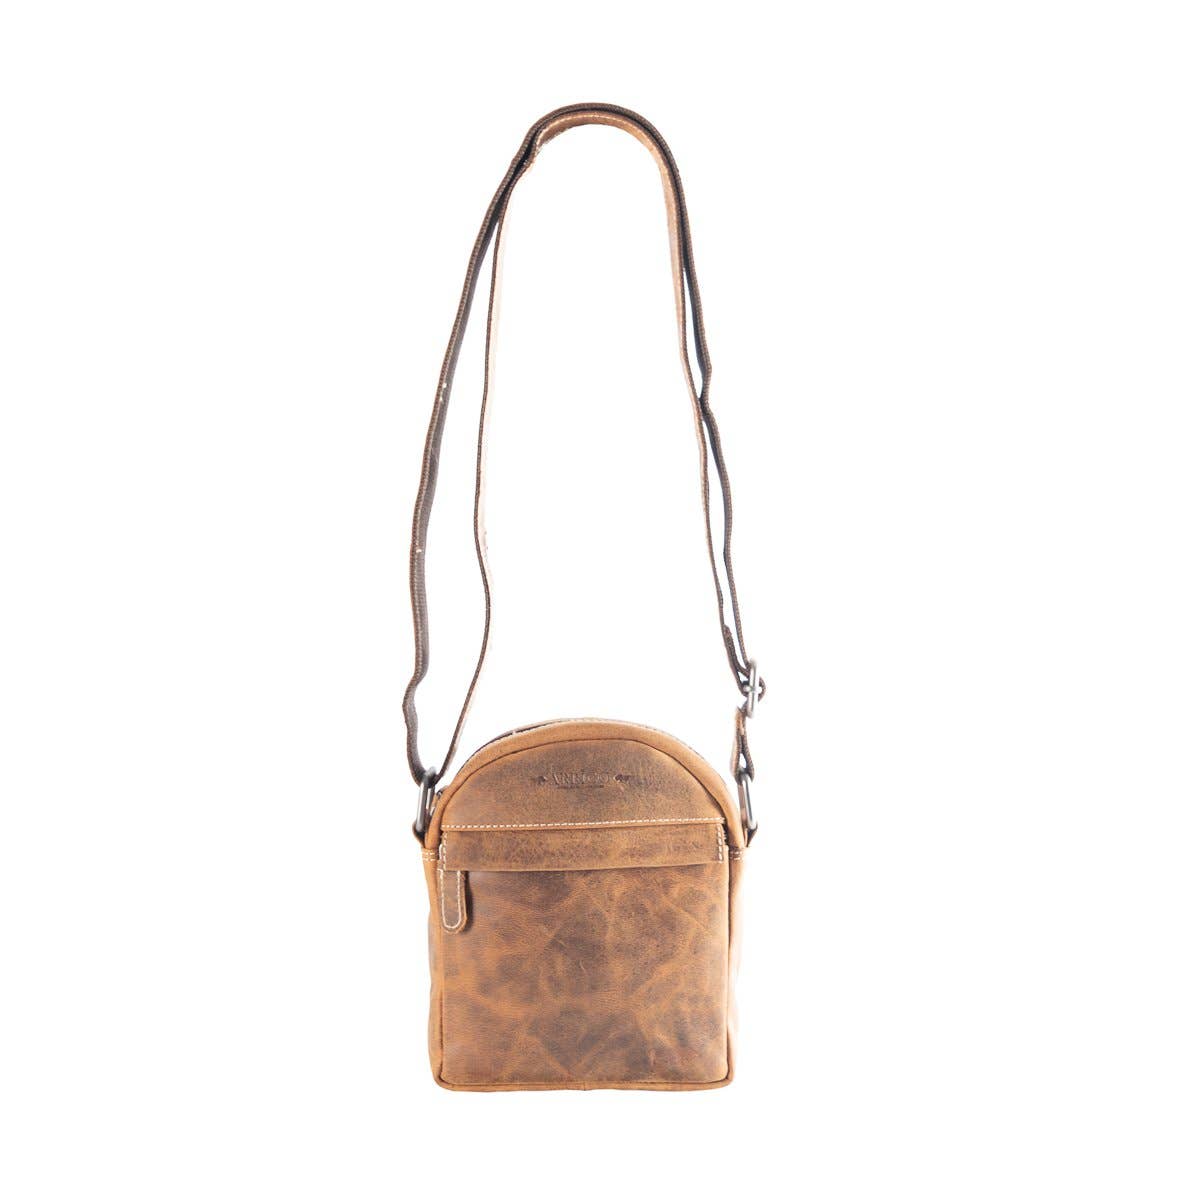 Arrigo Shoulder & Crossbody Bag - Buffalo Leather - Cognac